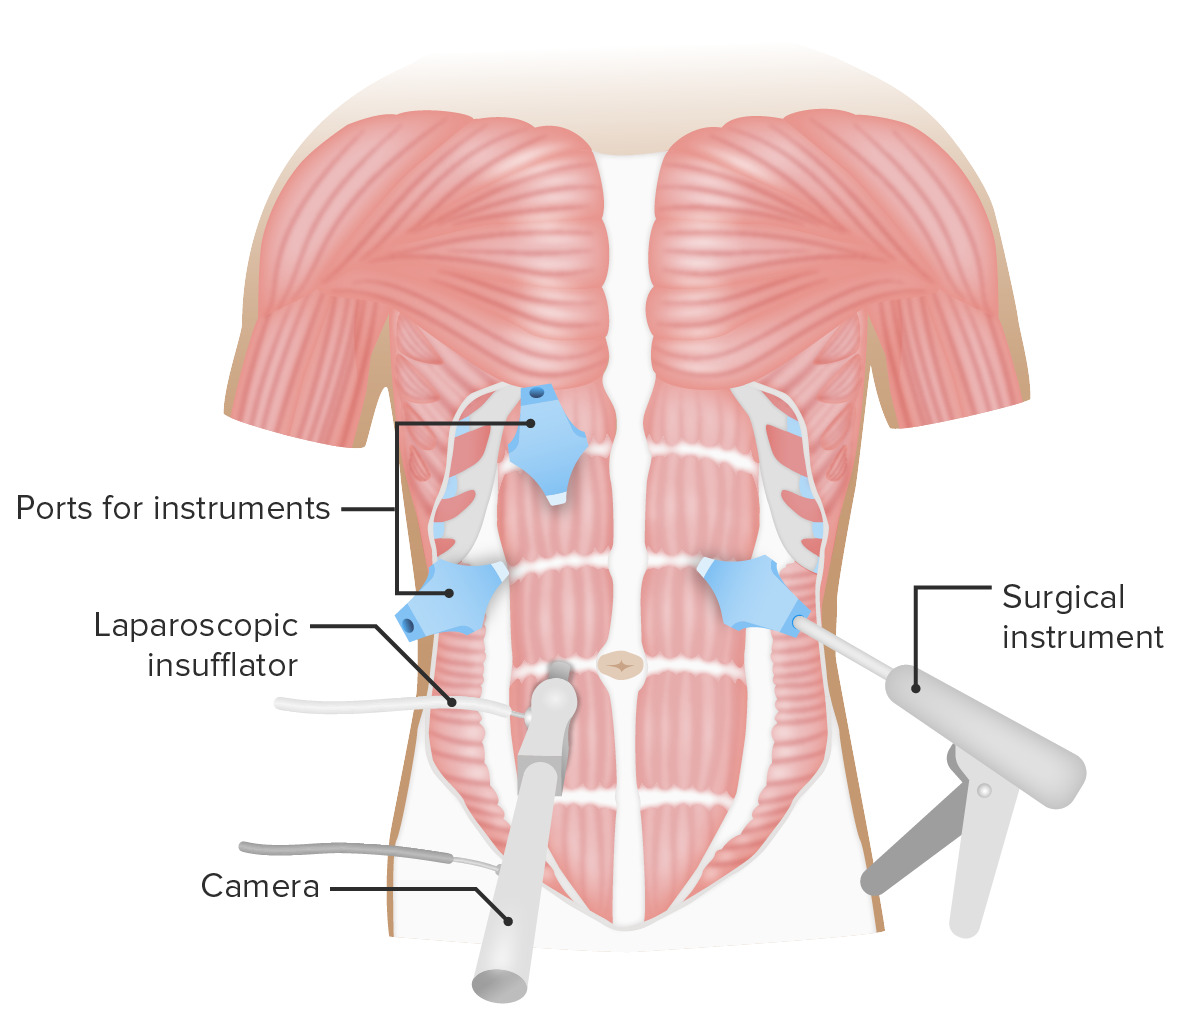 Laparoscopic intervention of the abdomen